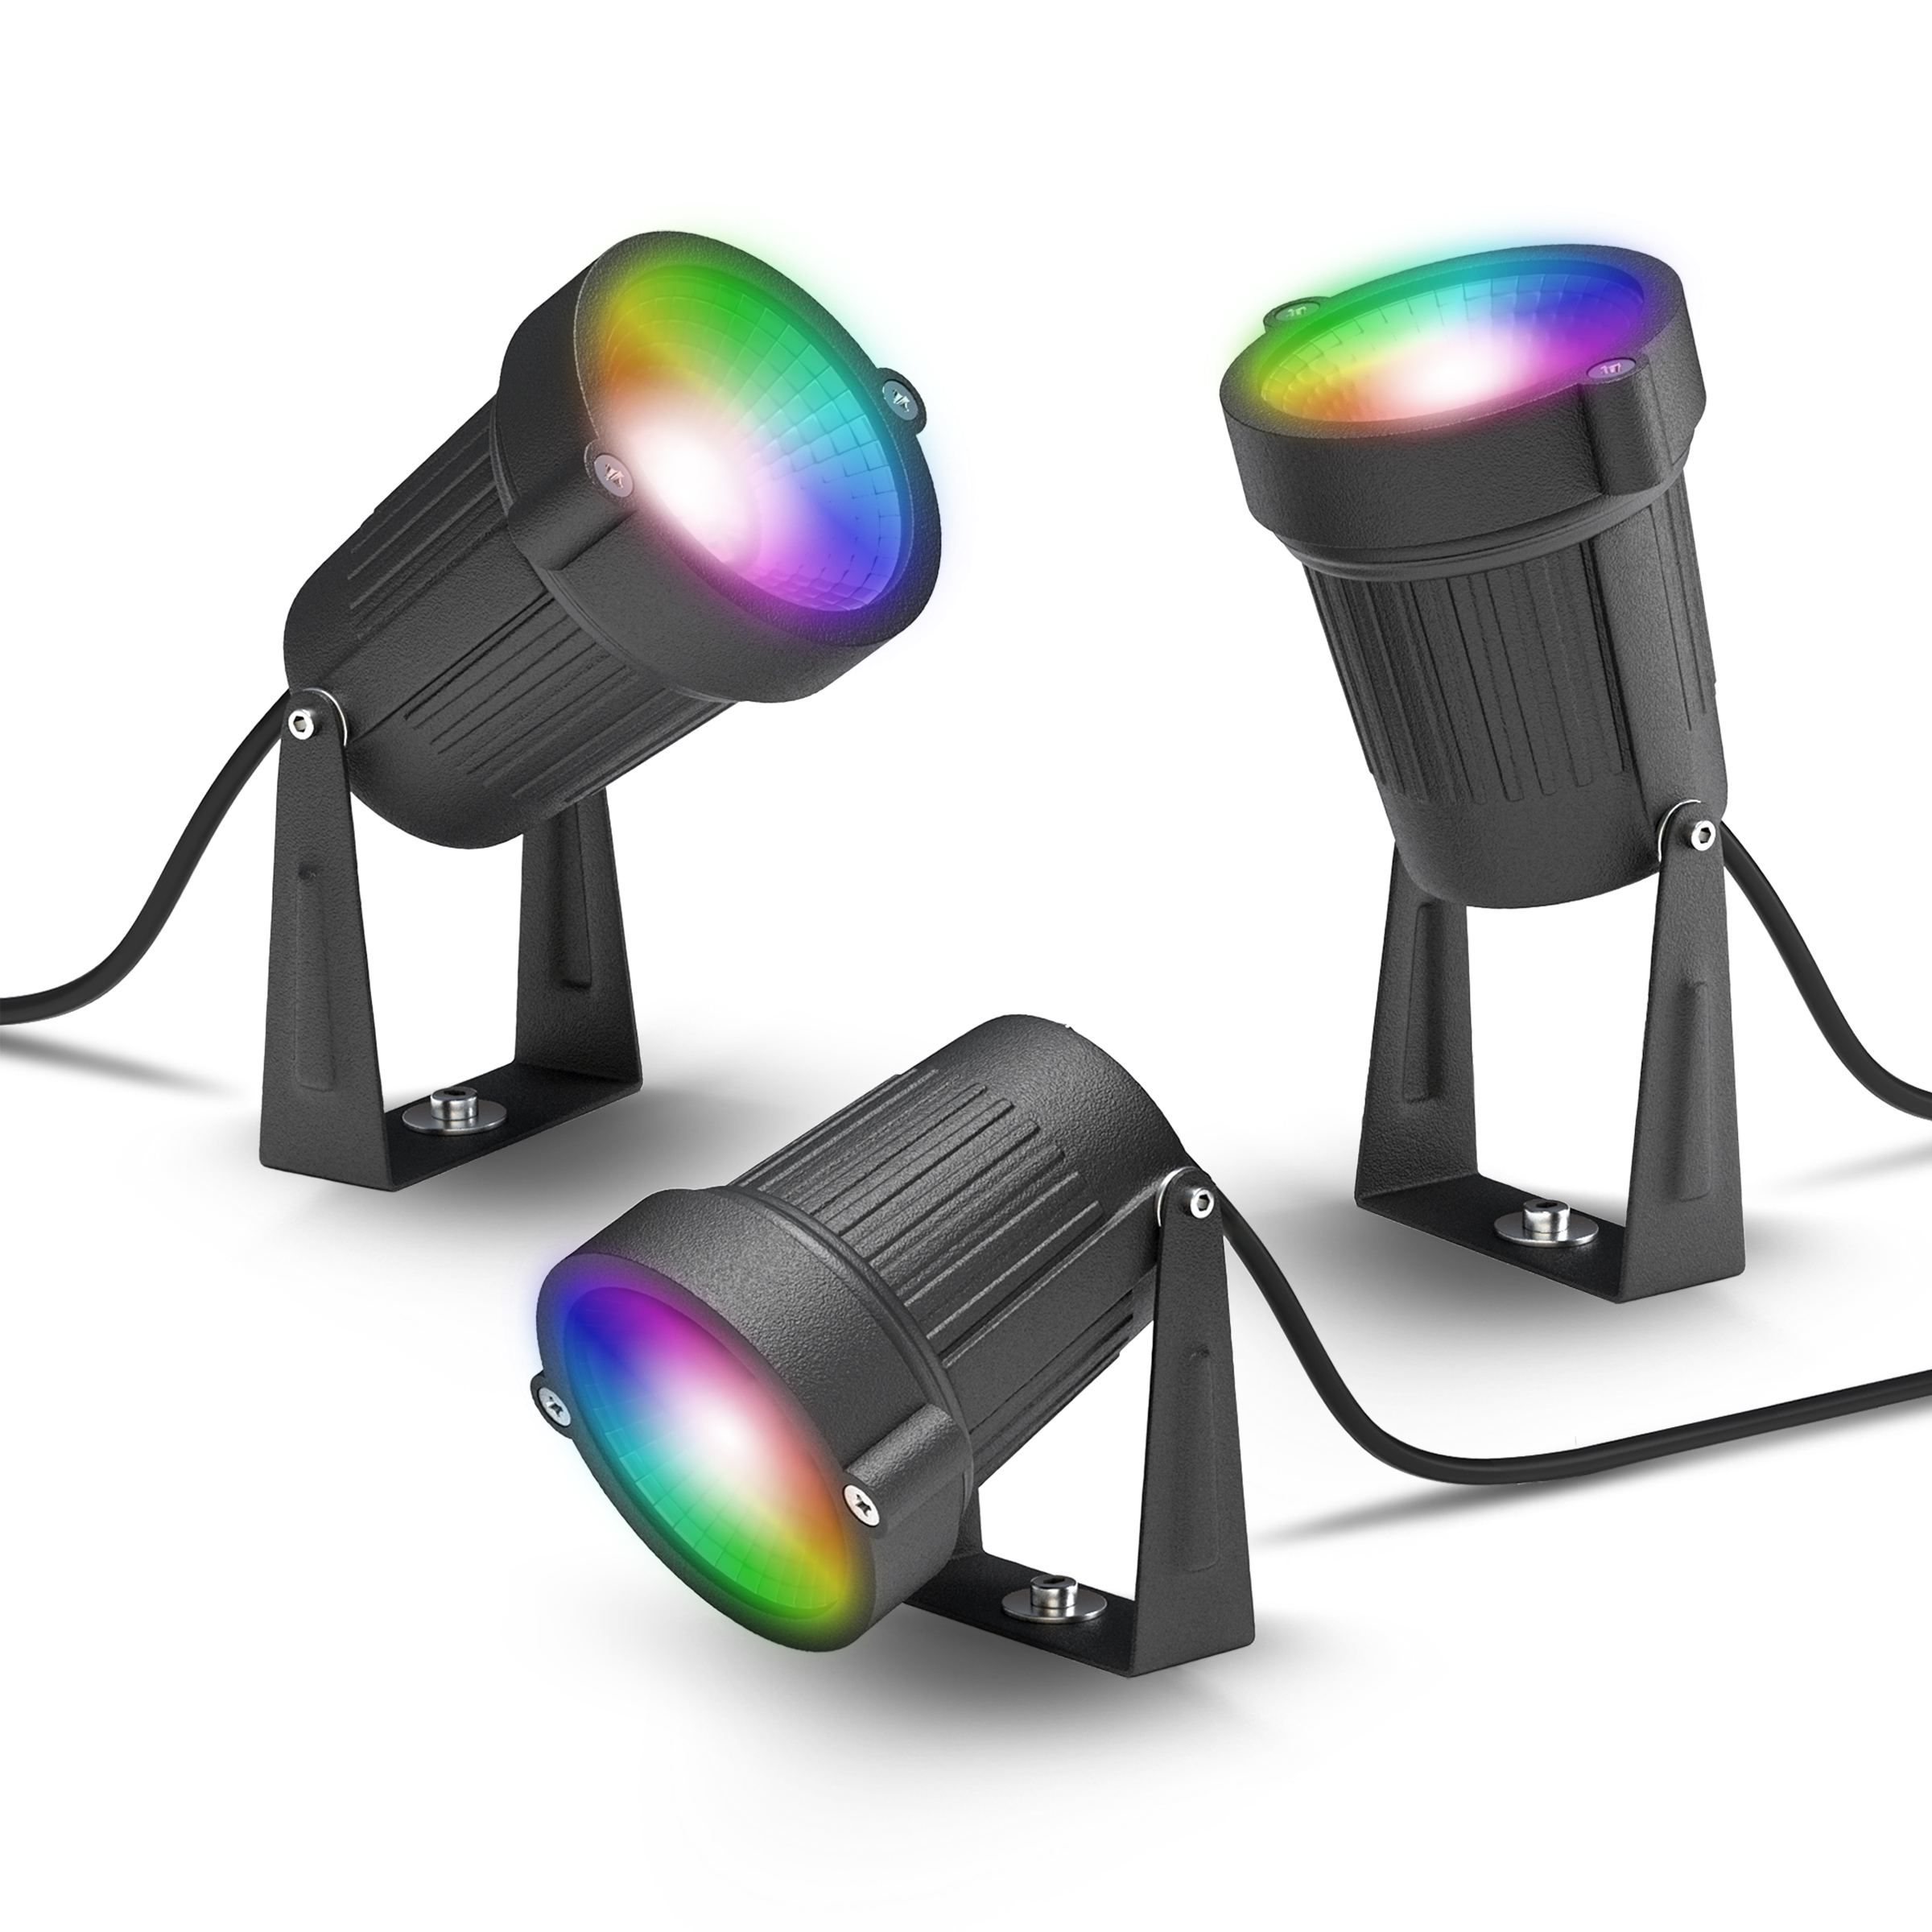 INNR Zigbee Outdoor Spot Lights, Lampe C LED mit white Hue Philips 3-pack, 130 RGB + Kompatibel Alexa, OSL & 1800K-6500K